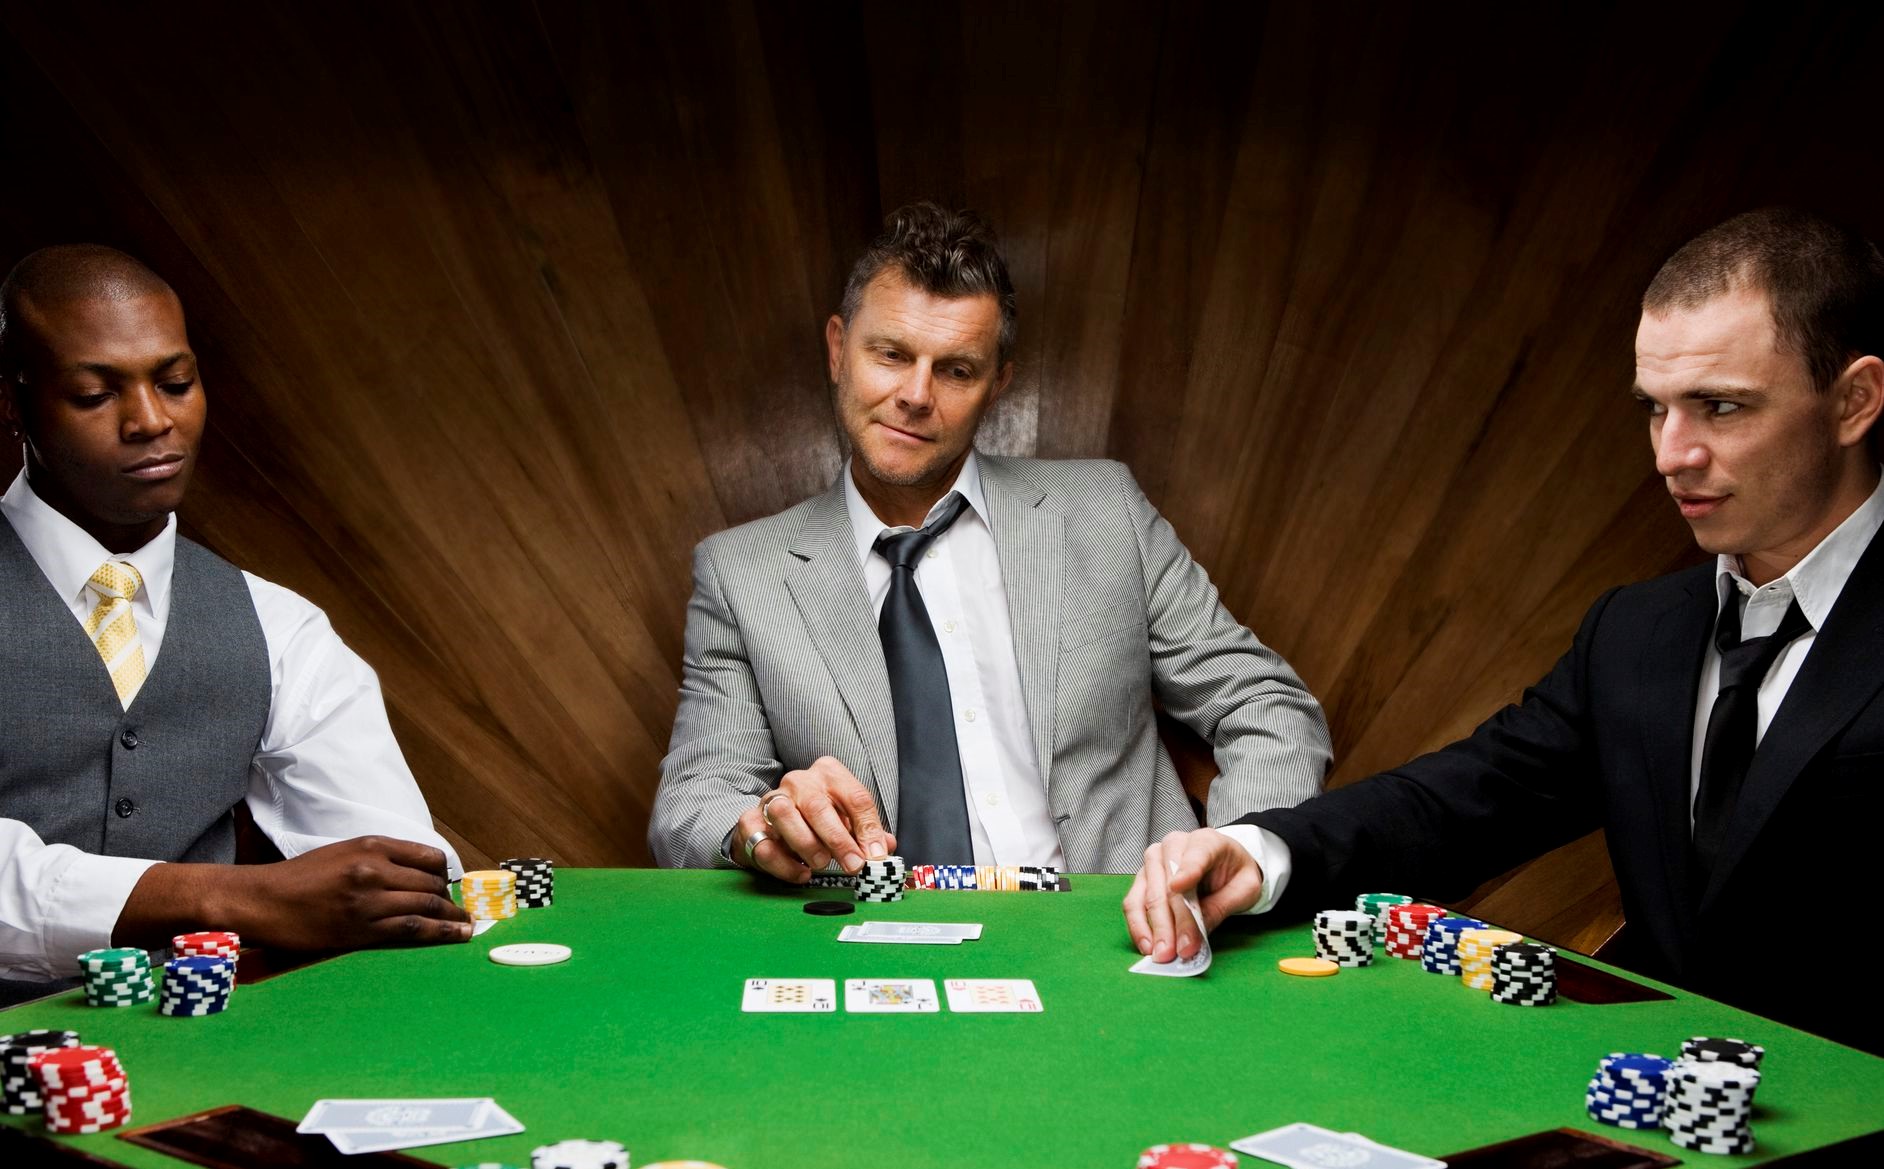 Parali poker oyna ve para kazan